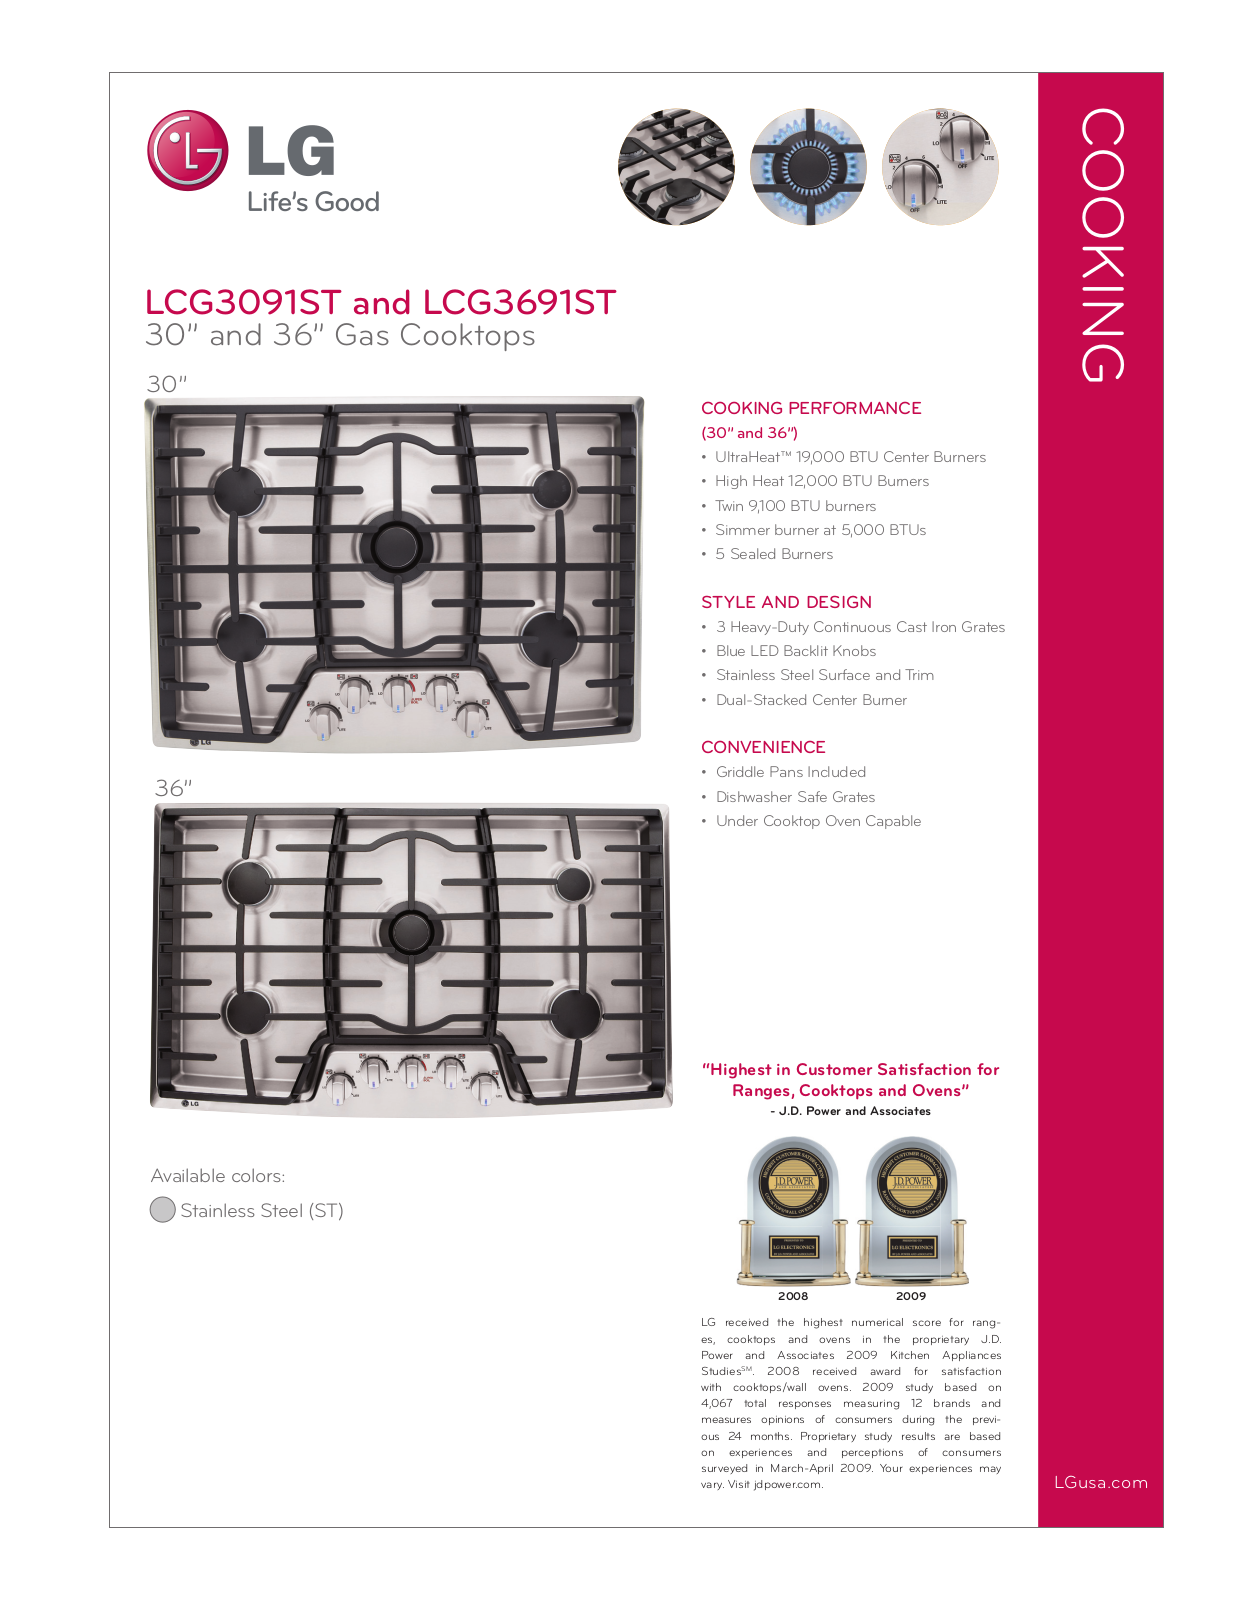 LG LCG3691ST, LCG3091ST Specification Sheet